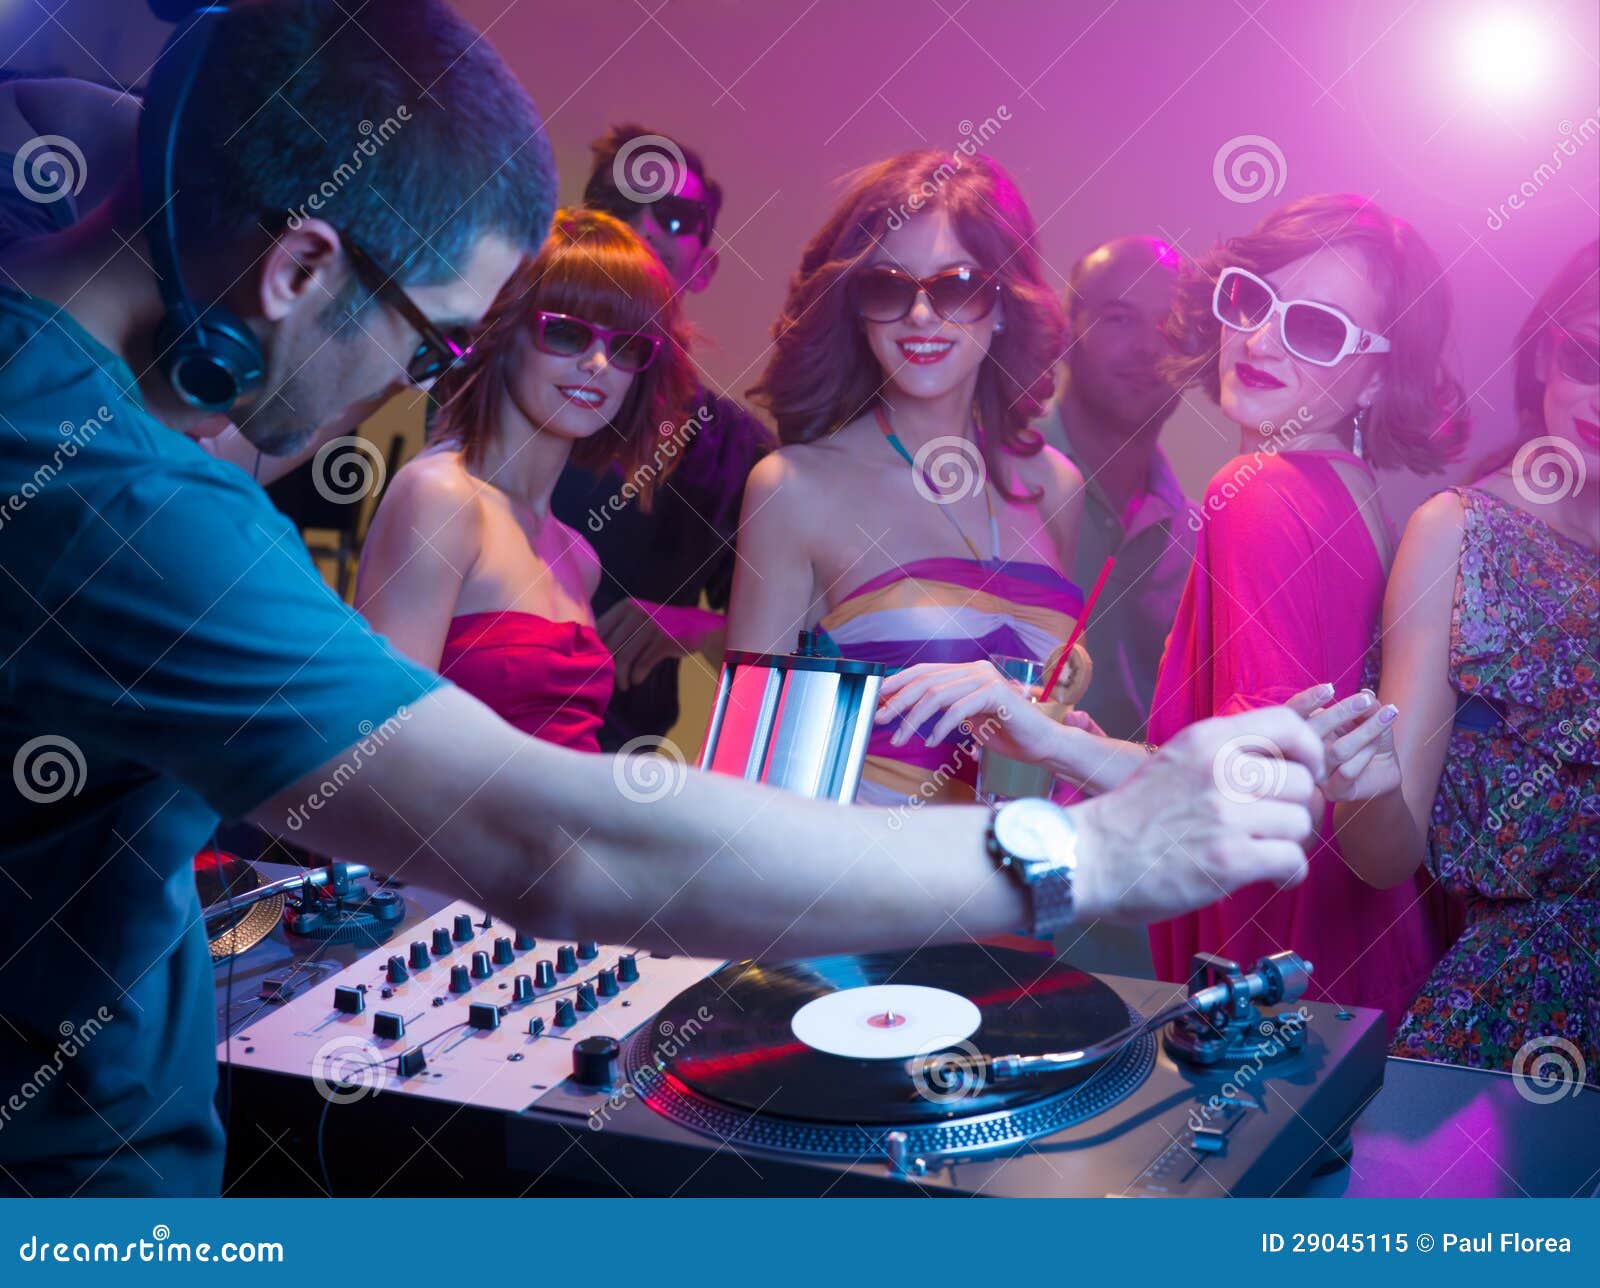 Fun in club stock image. Image of adult, dancing, beautiful - 29045115